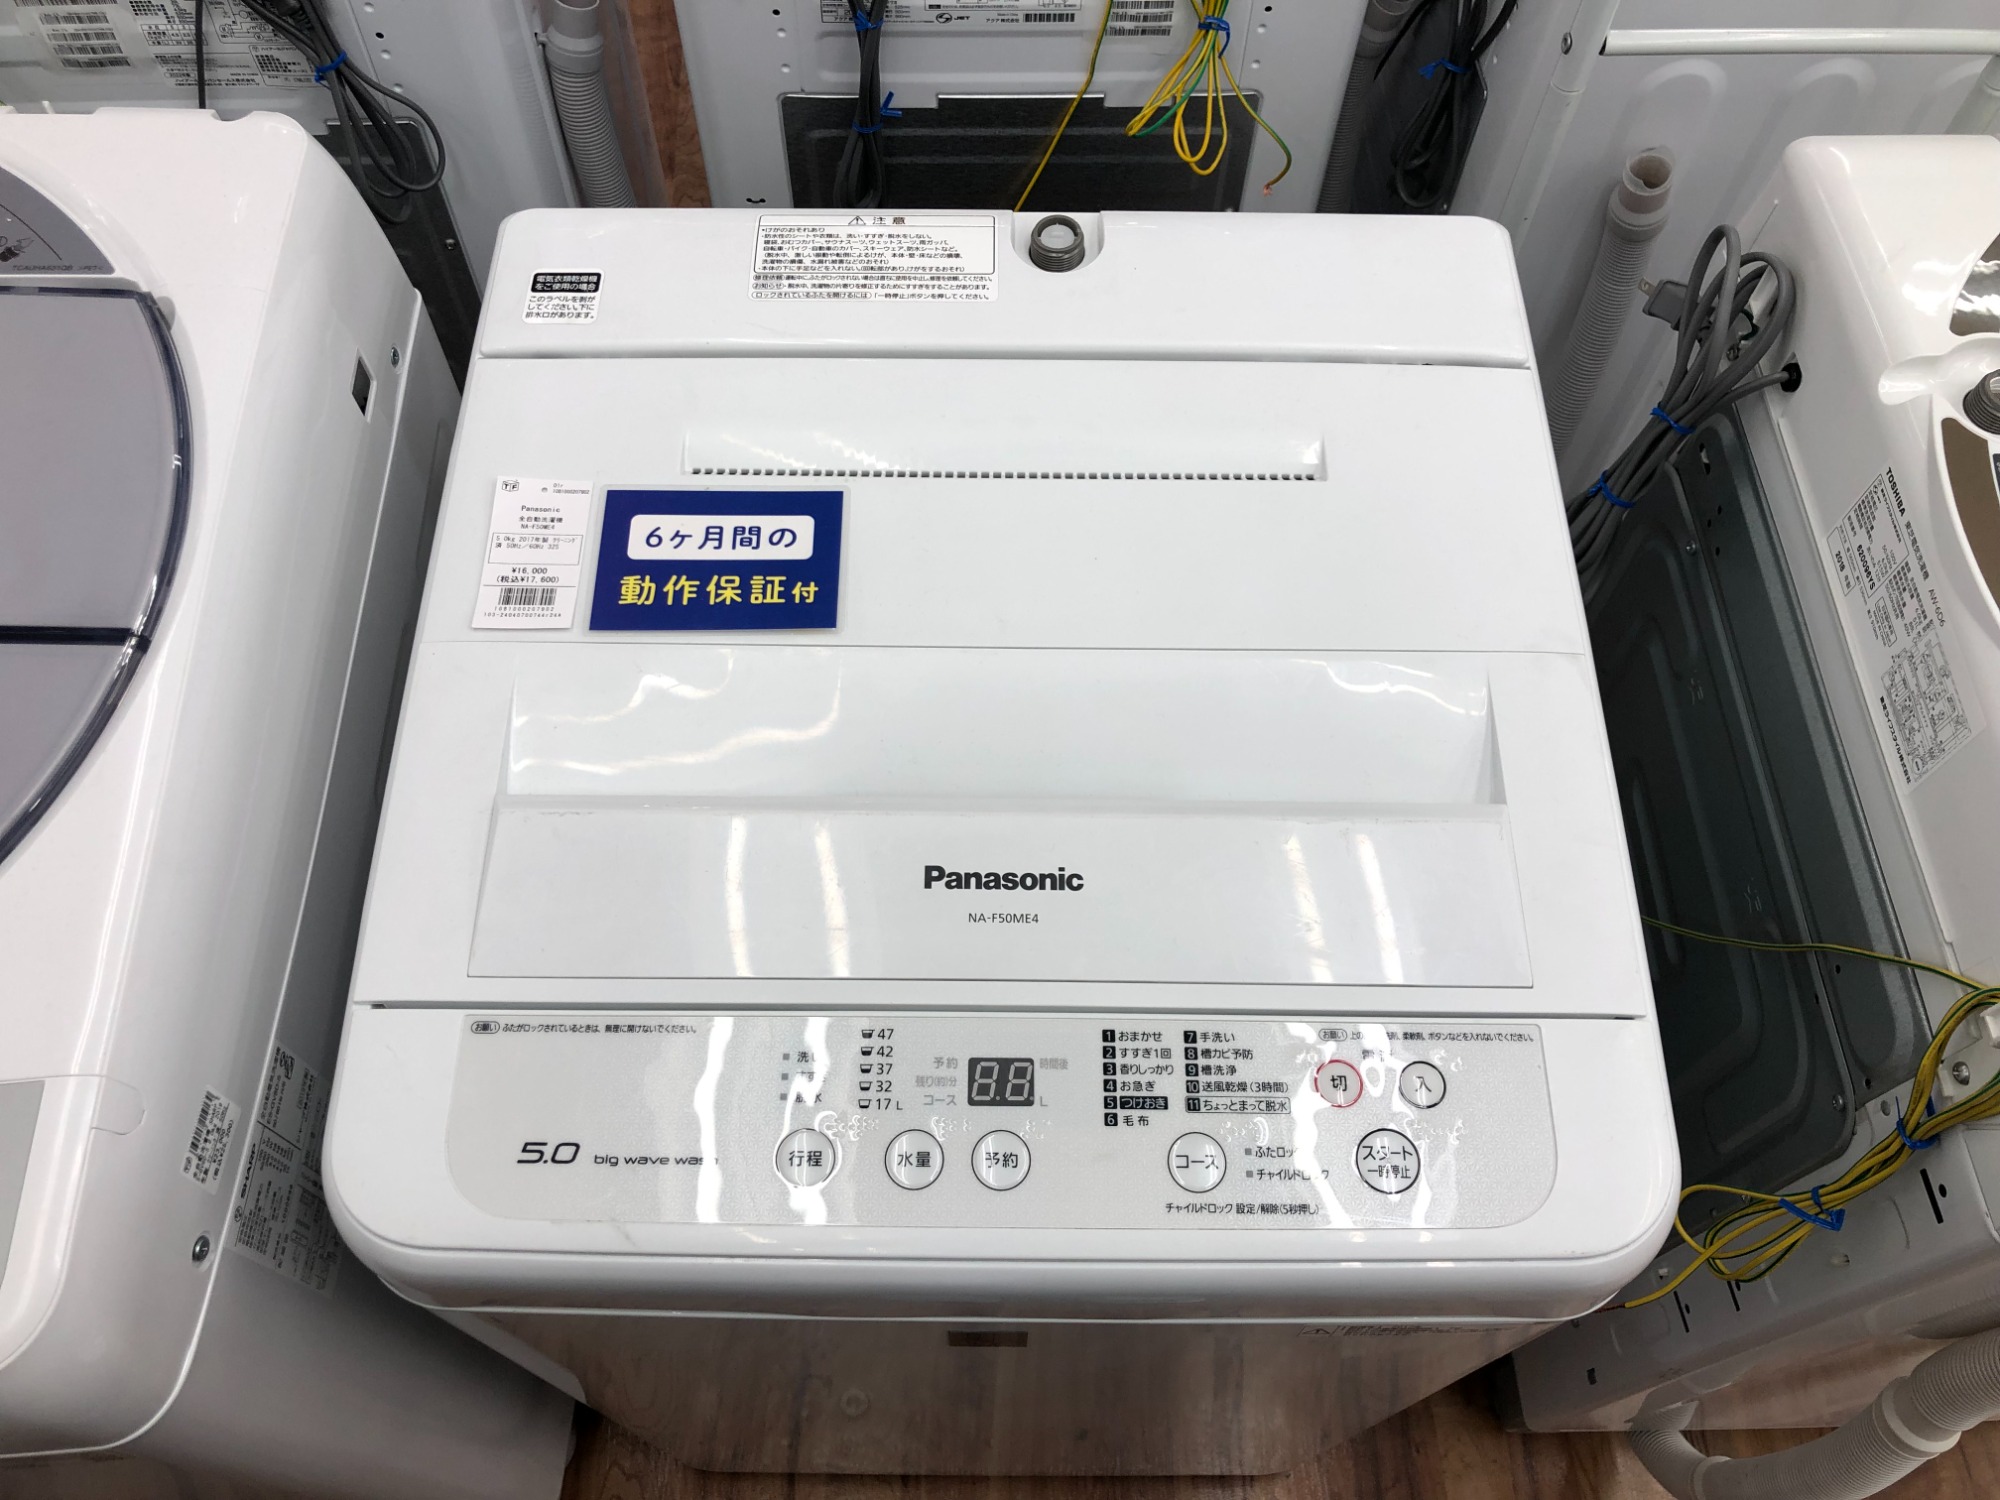 Panasonic(パナソニック) 2017年製 5.0kg洗濯機 が入荷しました 